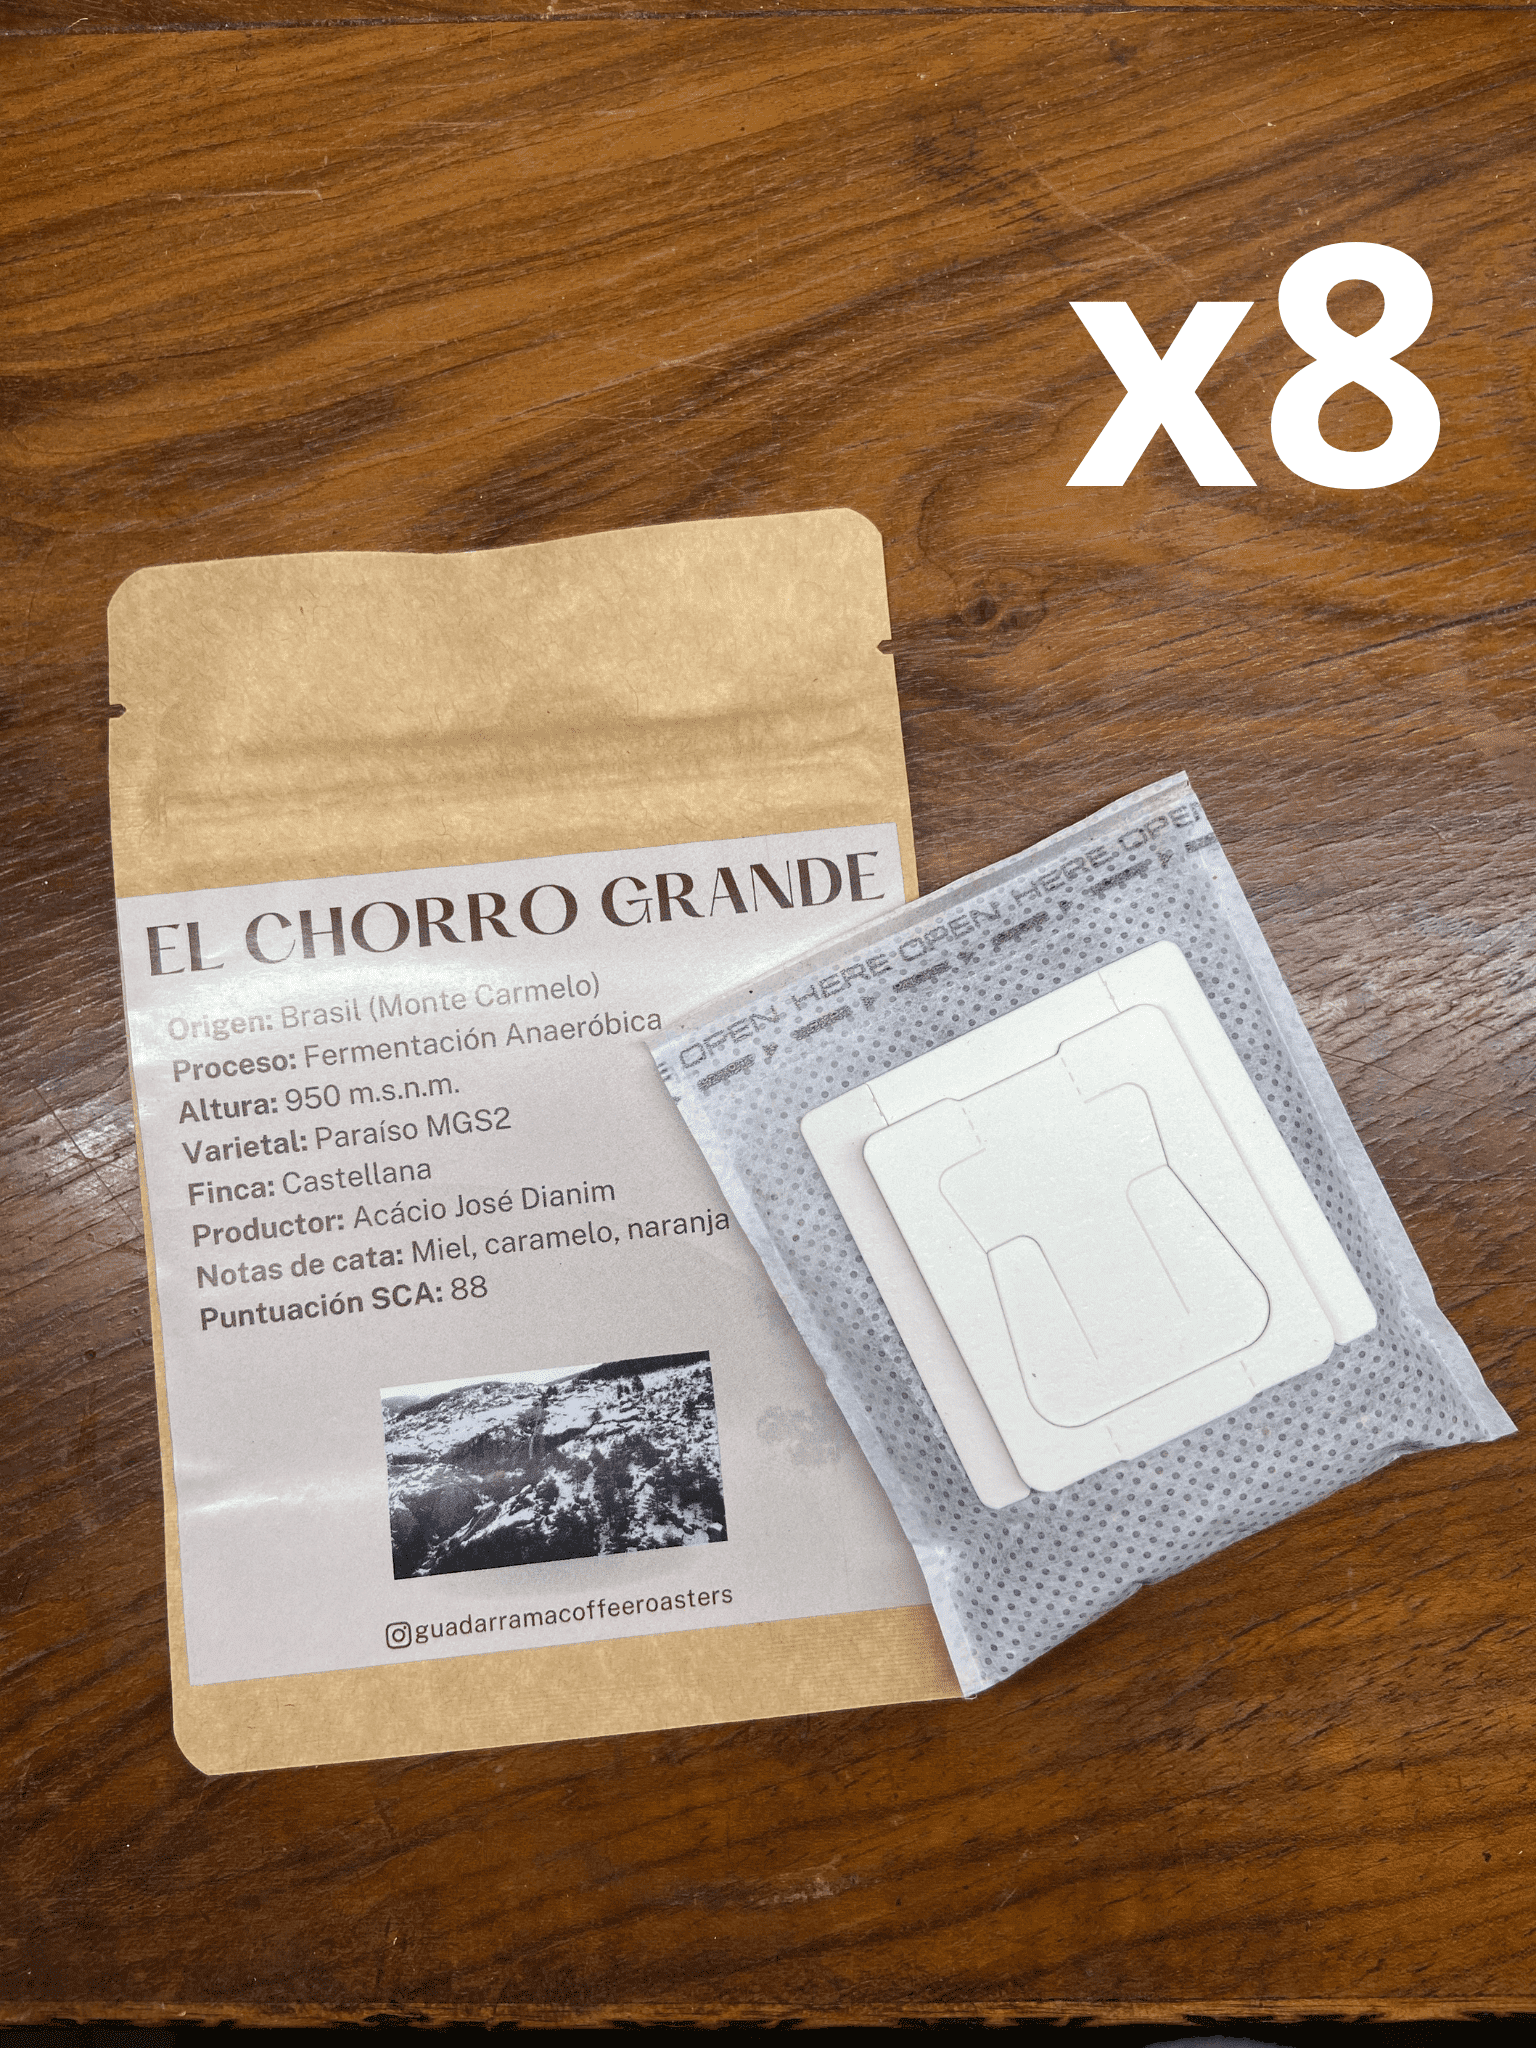 Drip Coffee Bag - El Chorro Grande x8